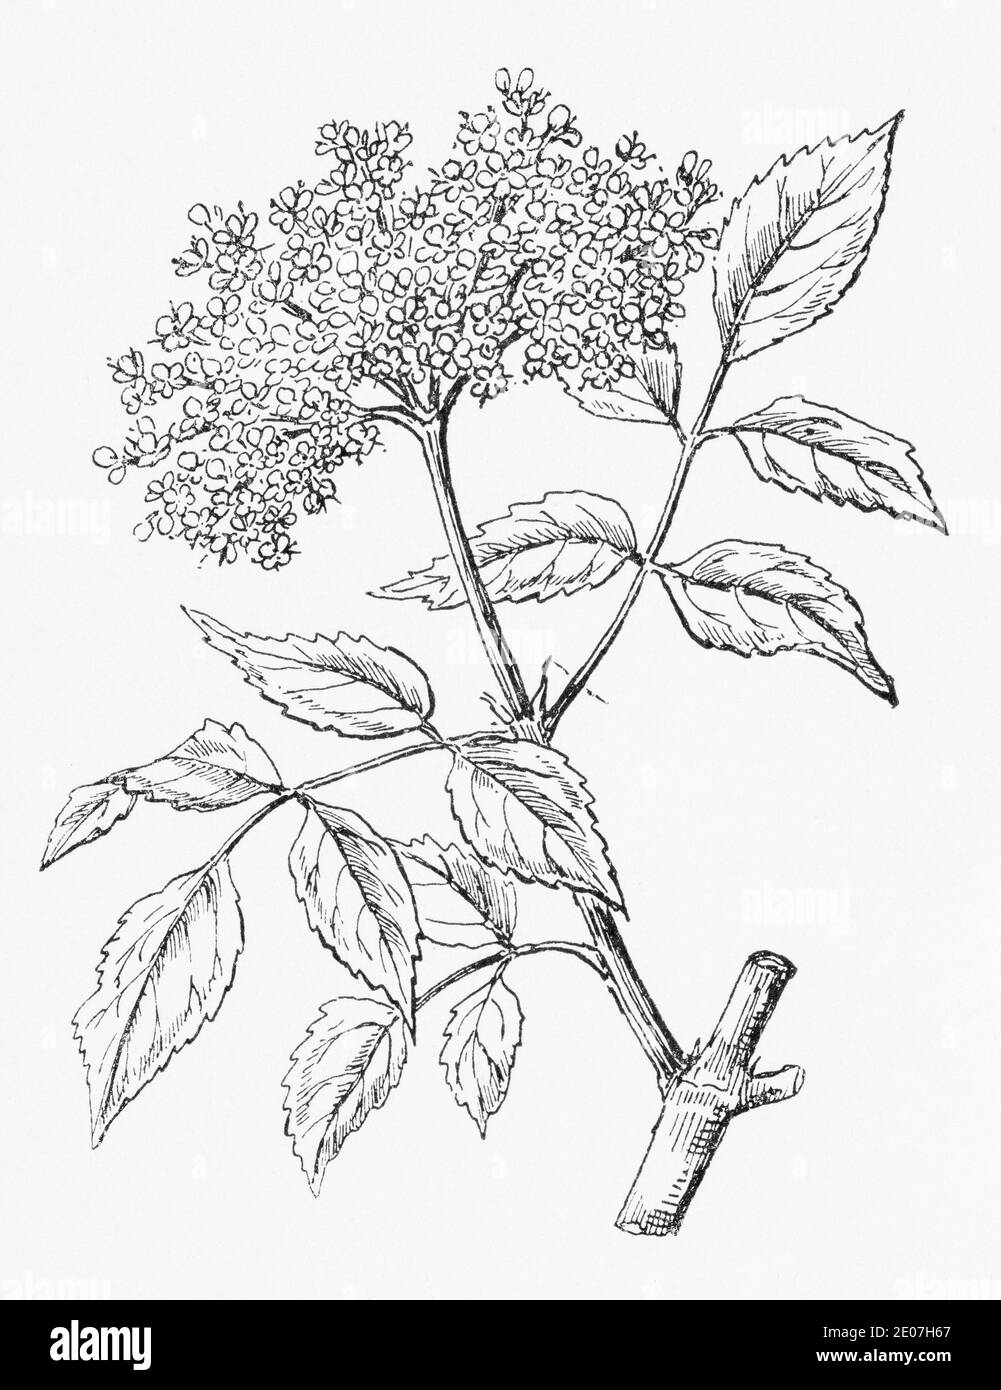 Old botanical illustration engraving of Common Elder / Sambucus nigra. Traditional medicinal herbal plant. See Notes Stock Photo